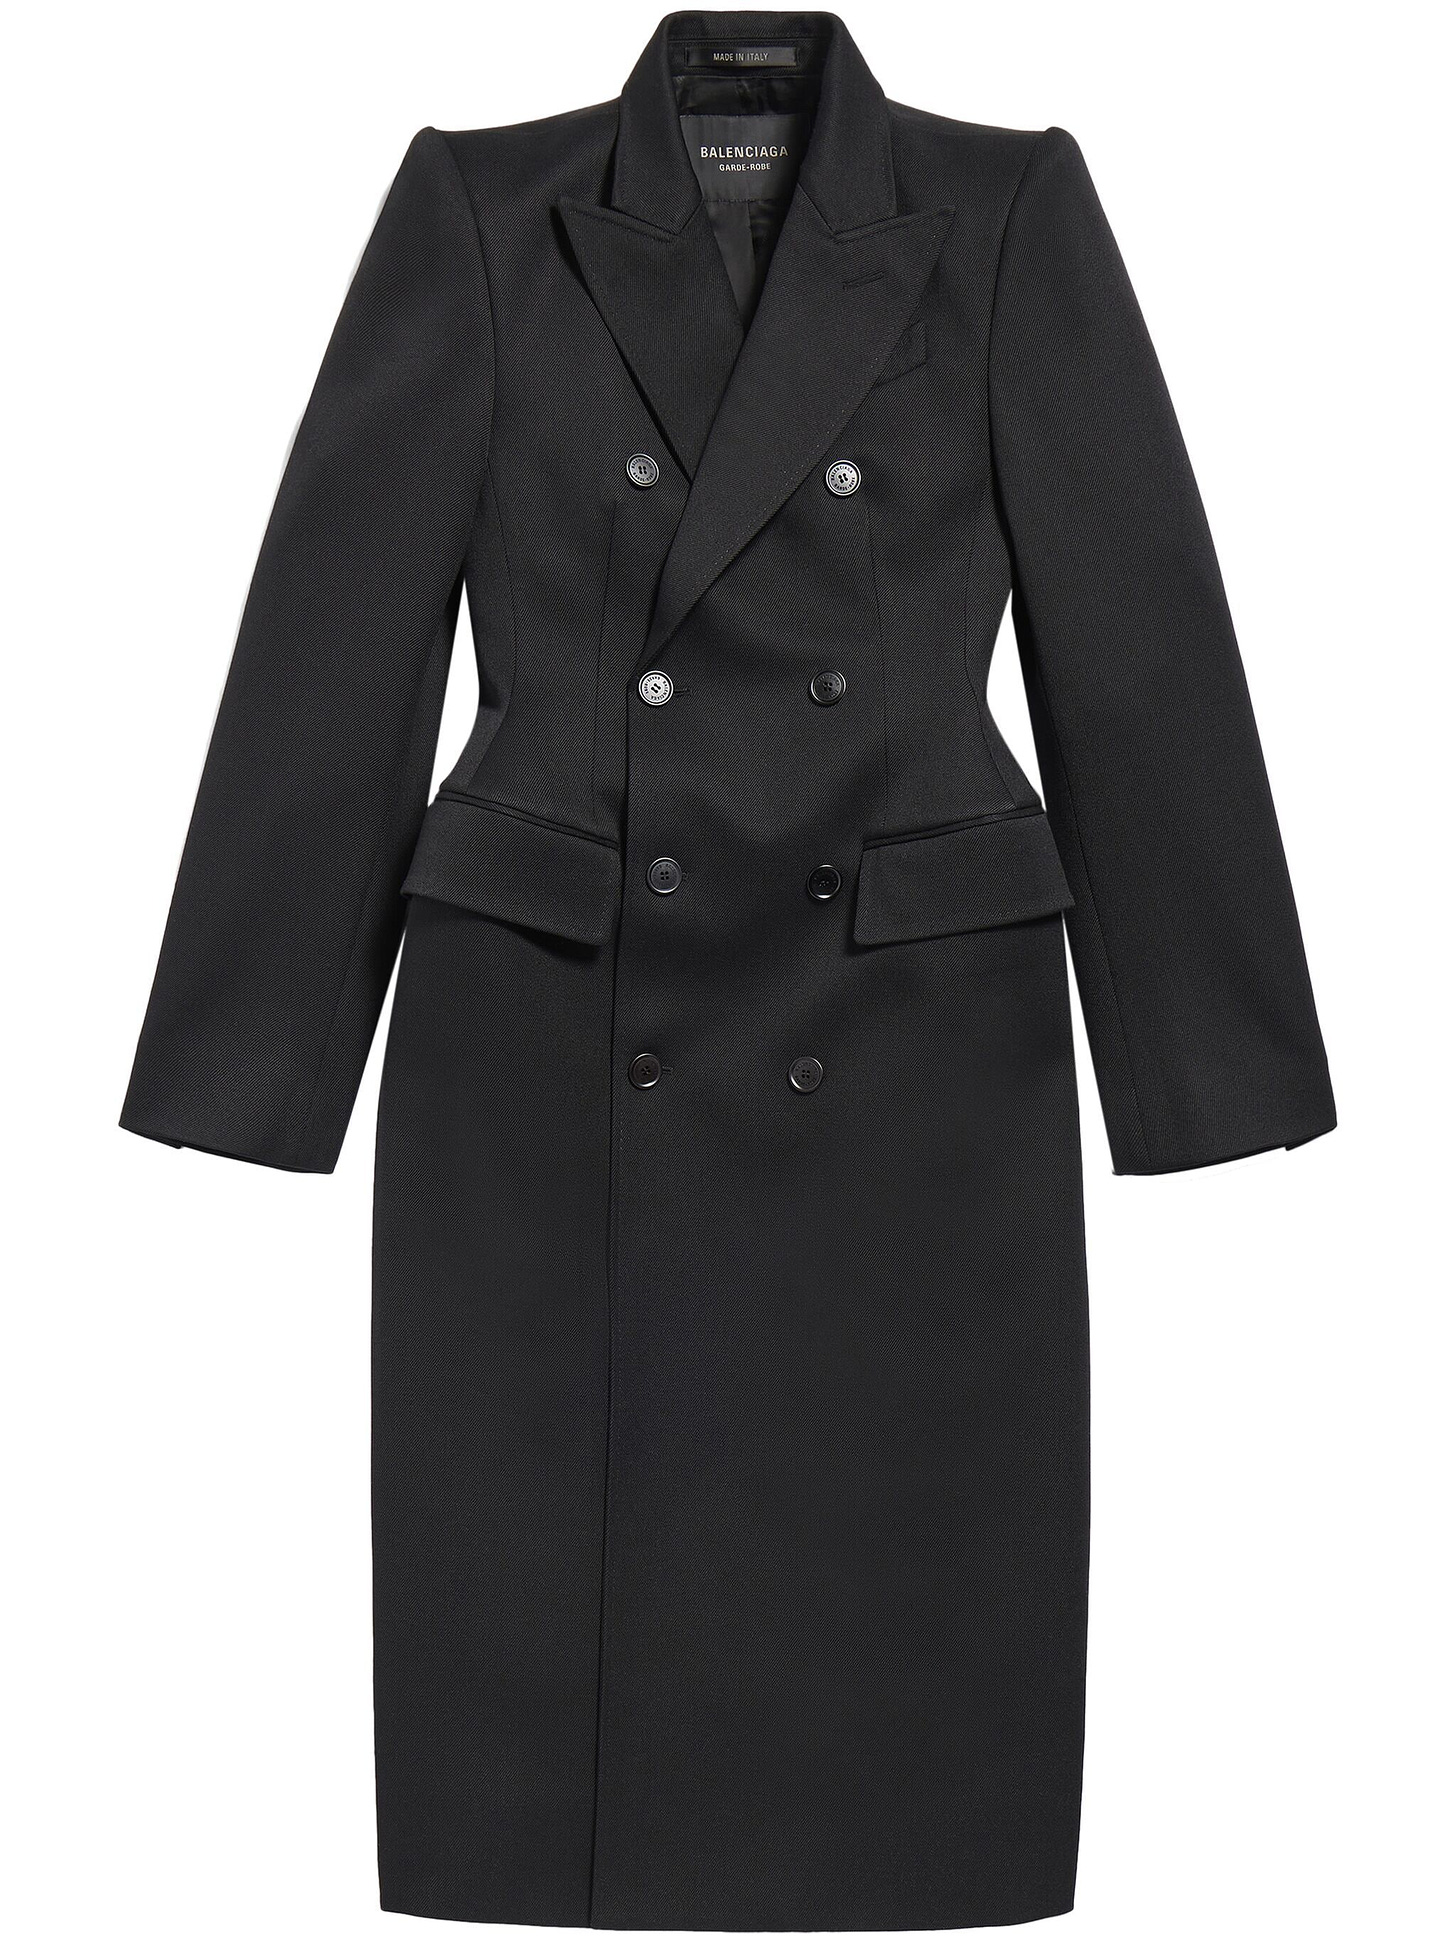 Balenciaga double-breasted hourglass coat